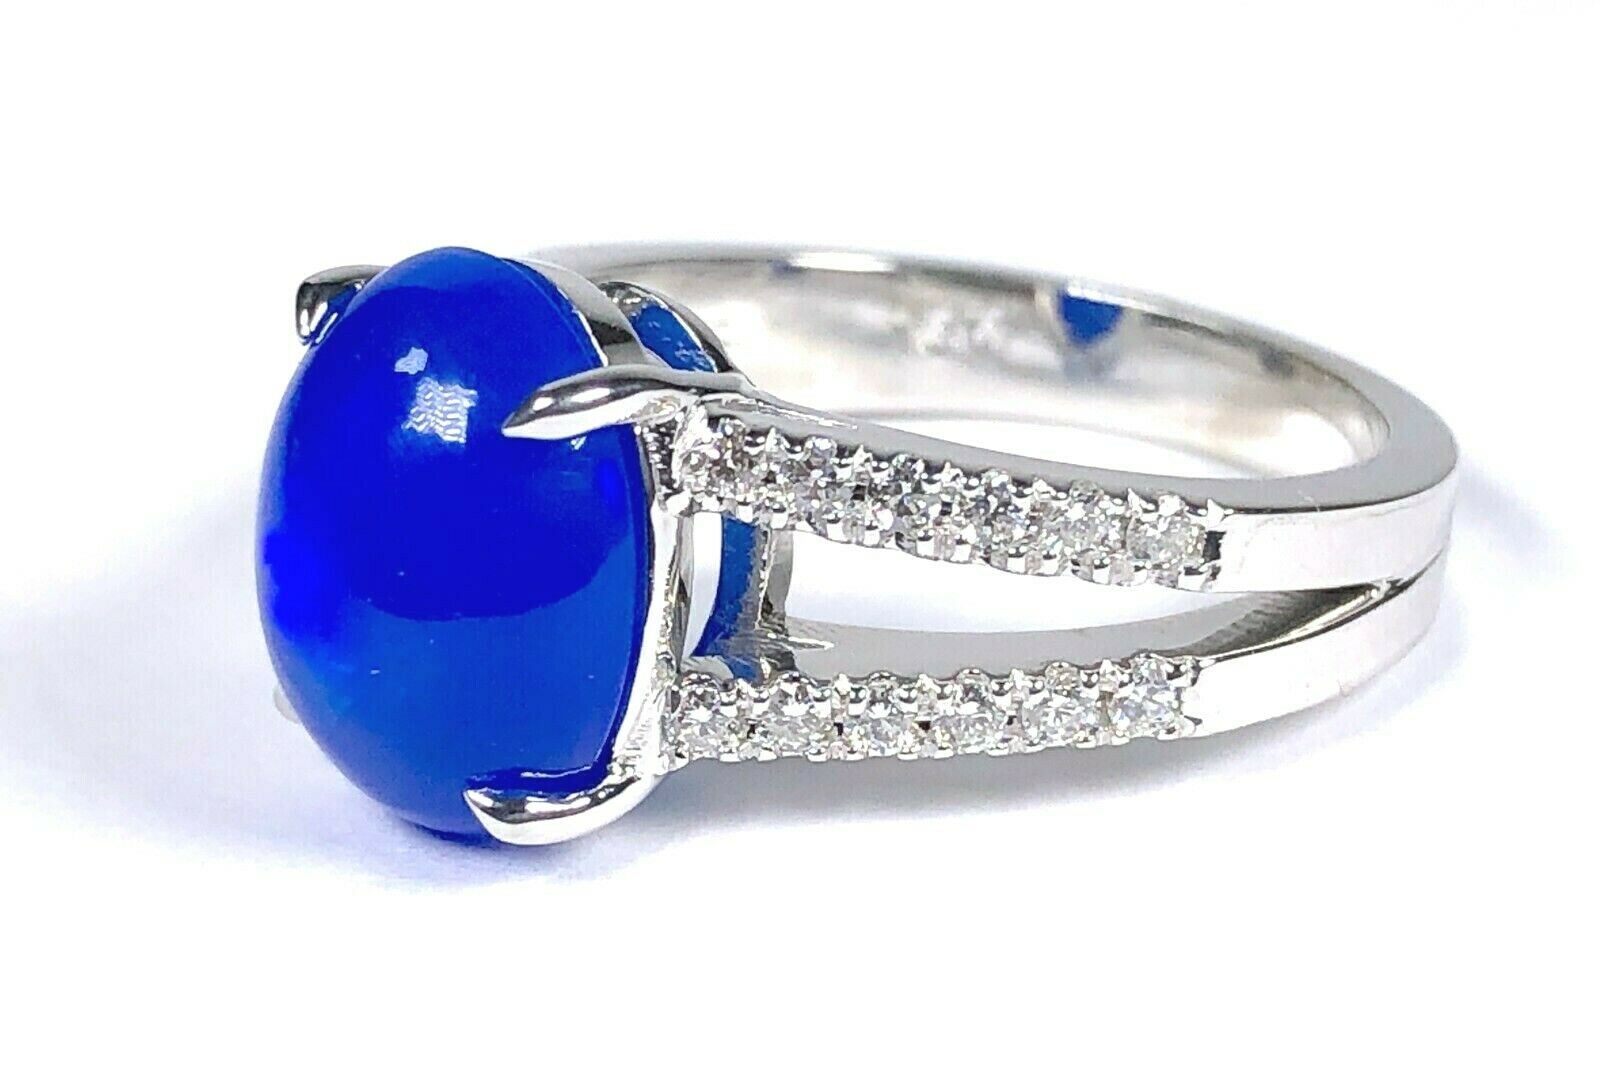 GIA 2.13 ct. Vivid Blue Opal & Diamond Ring in 14K White Gold